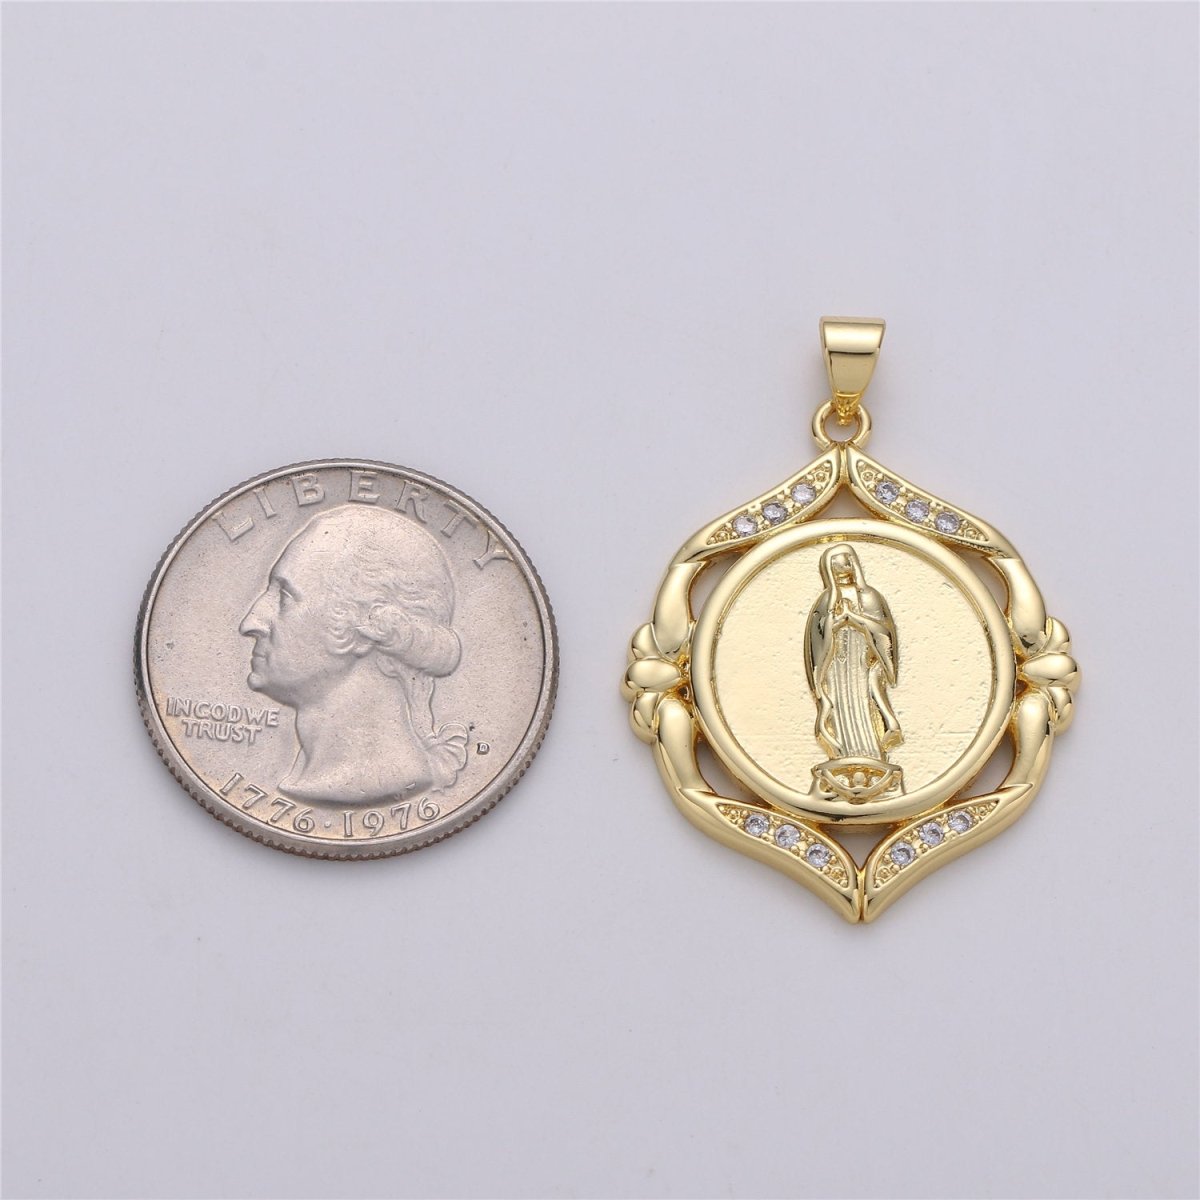 24k Gold Filled Virgin Mary Medallion Scalloped Edge 26mm - Religious Jewelry, Catholic Pendant, Saint Charm, 24K gf Lady Guadalupe Charm I-574 - DLUXCA